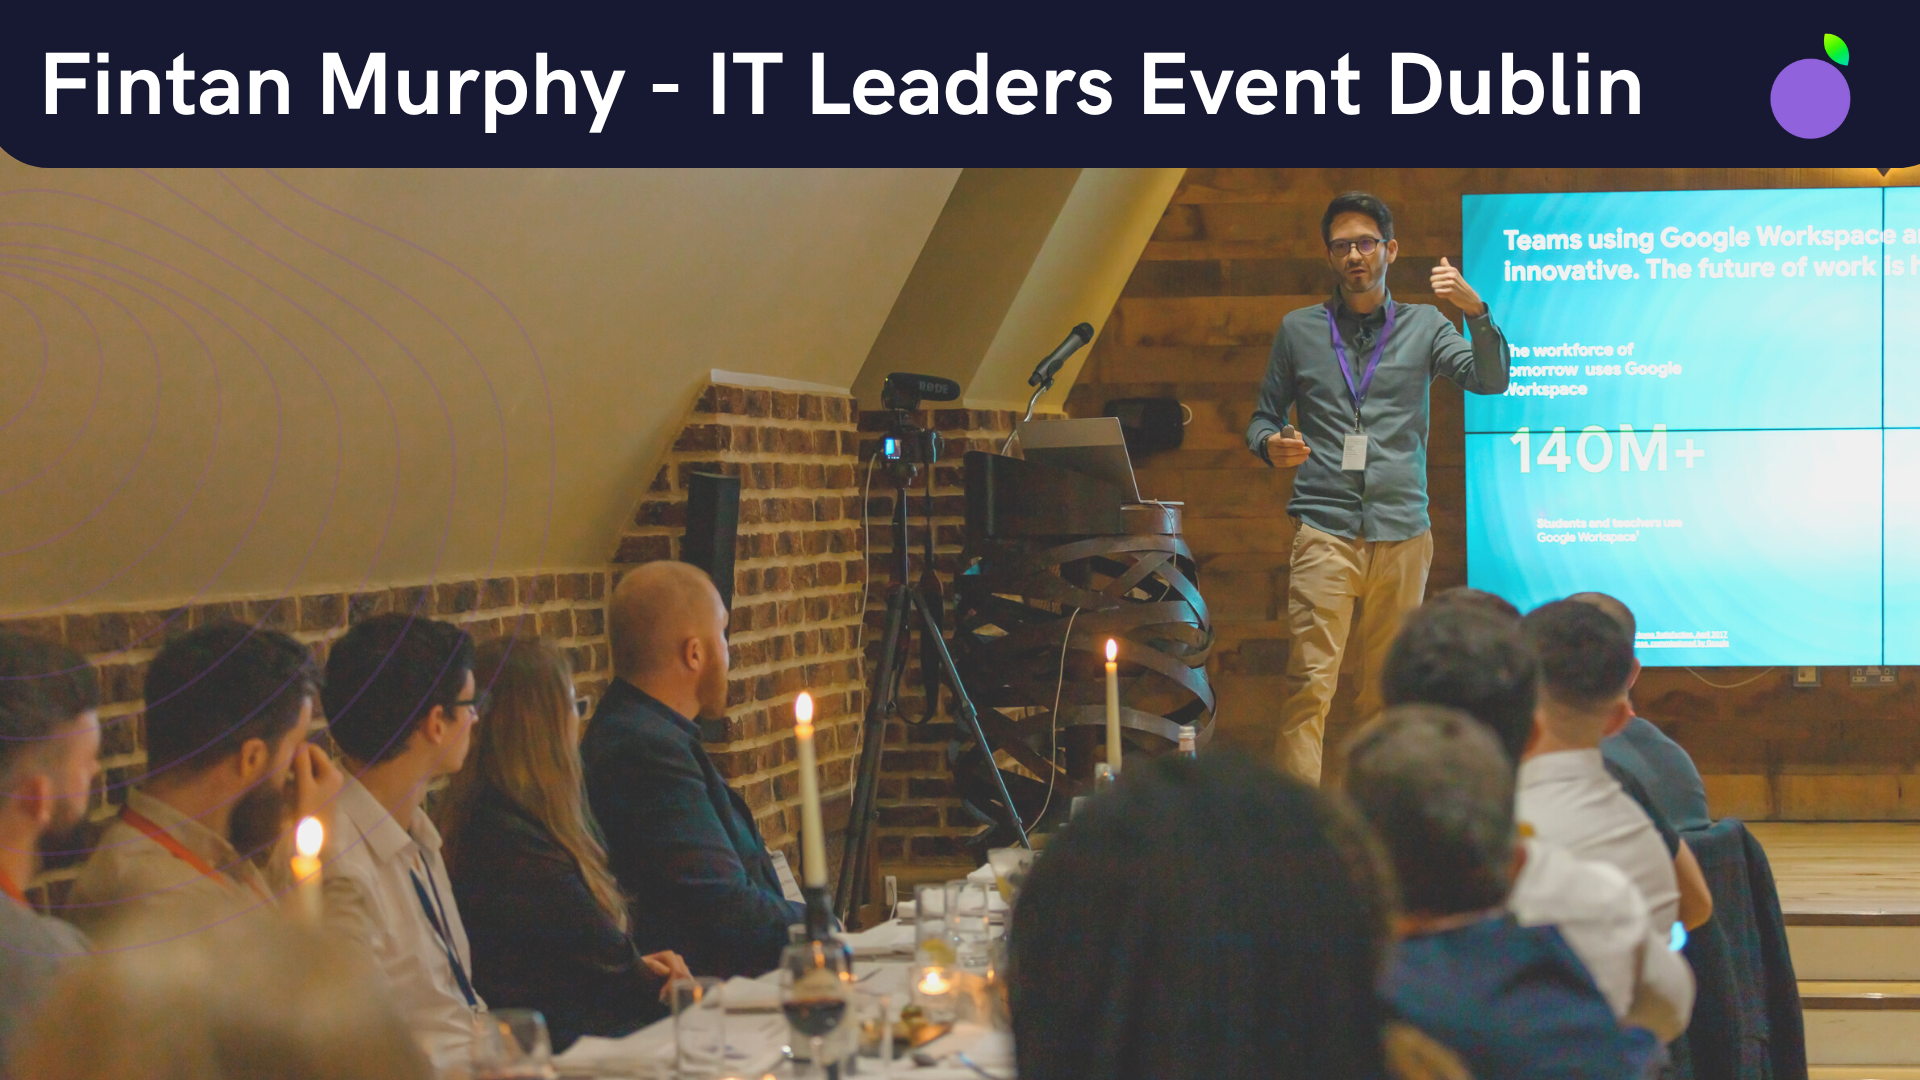 Fintan Murphy Speaking At The IT Leaders Dinner On Google Workspace And Digital Natives